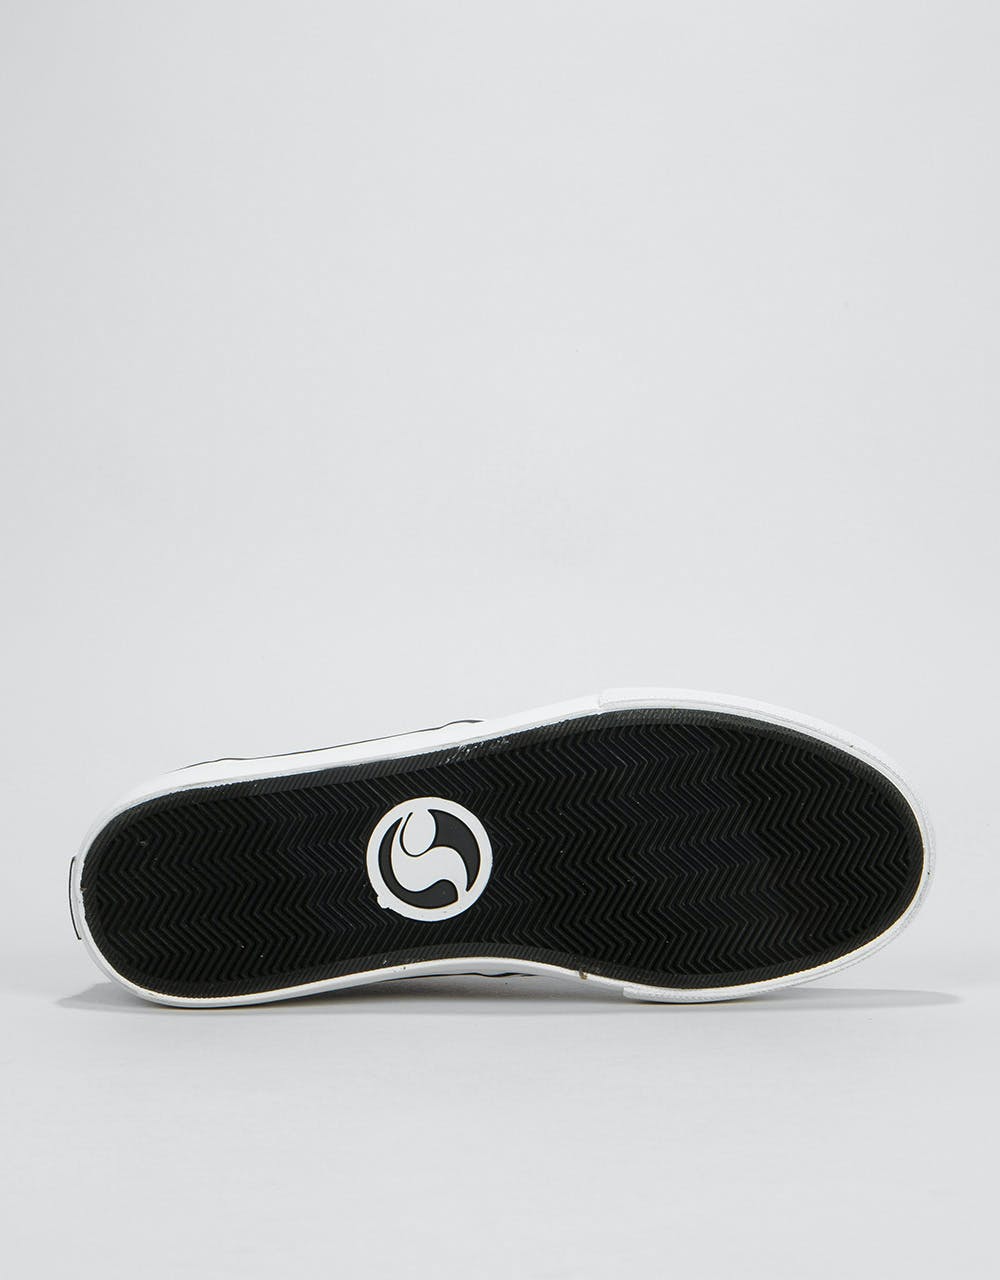 DVS Rico CT Skate Shoes - Black/White Canvas